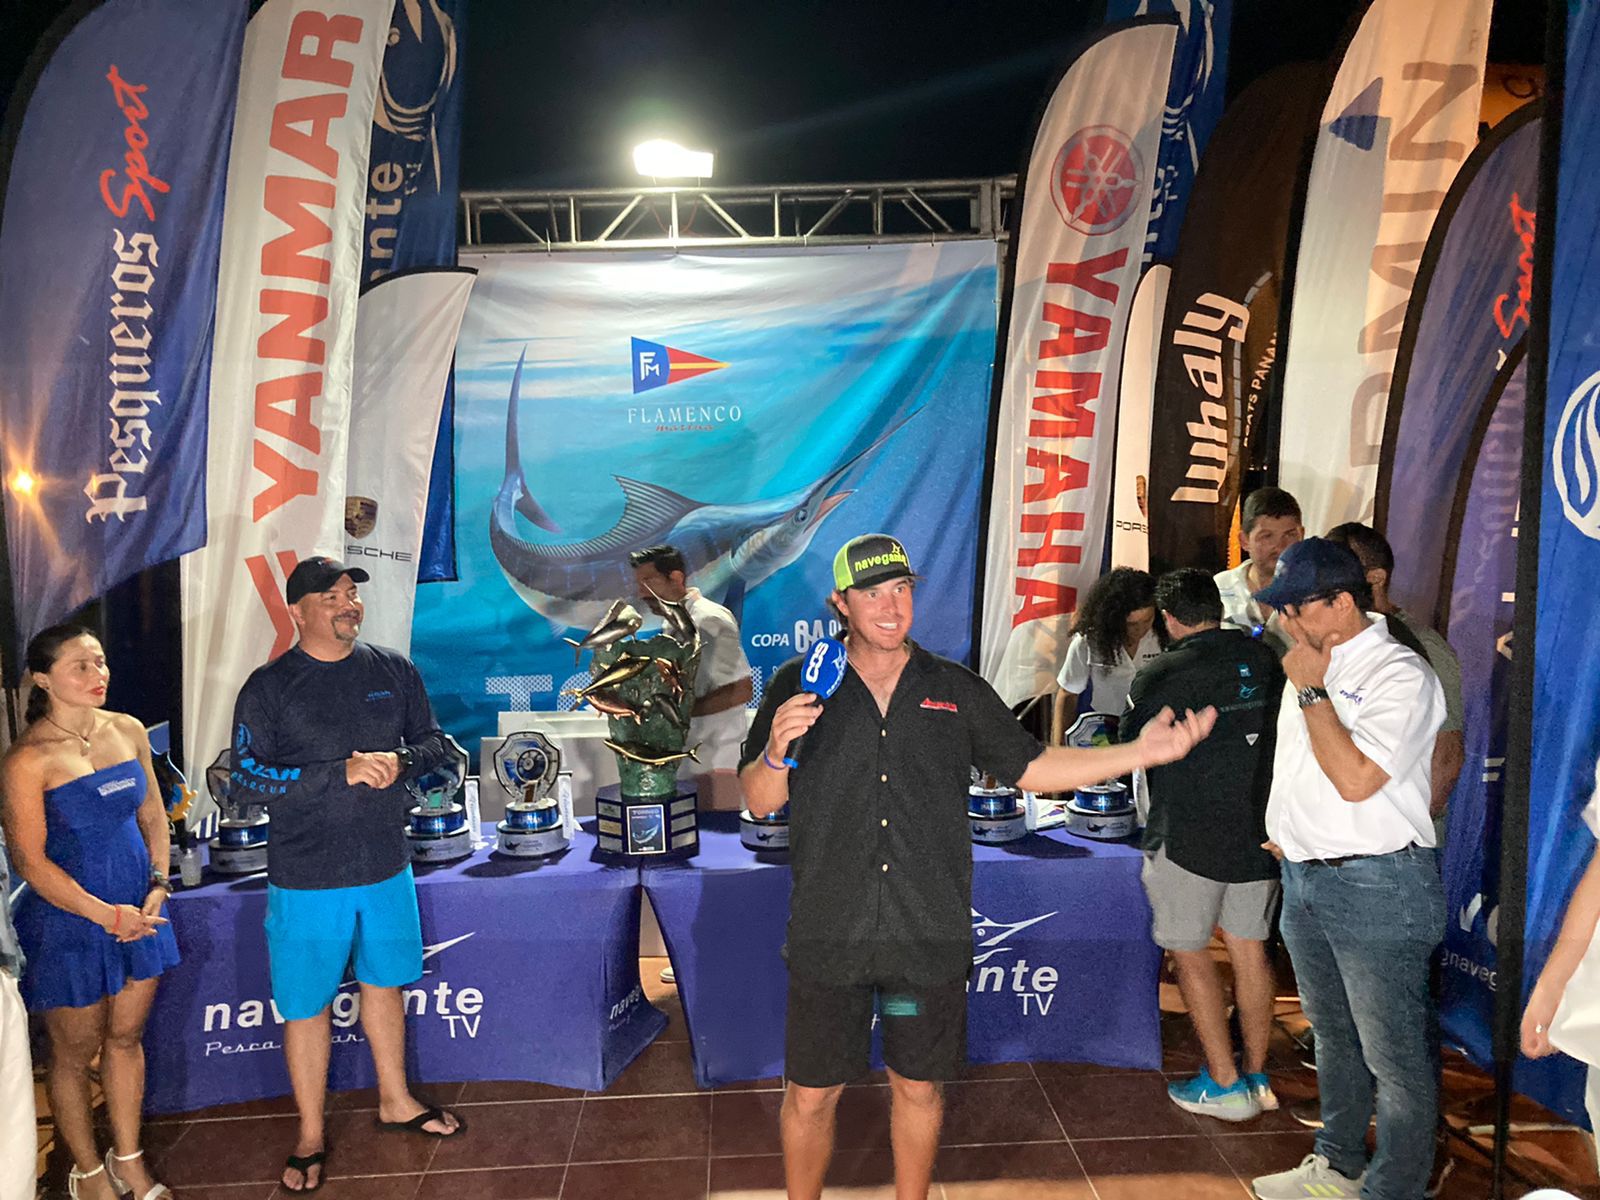 Culmina con éxito en Panamá torneo de pesca Navegante tv Flamenco Copa Outdoor Adventure